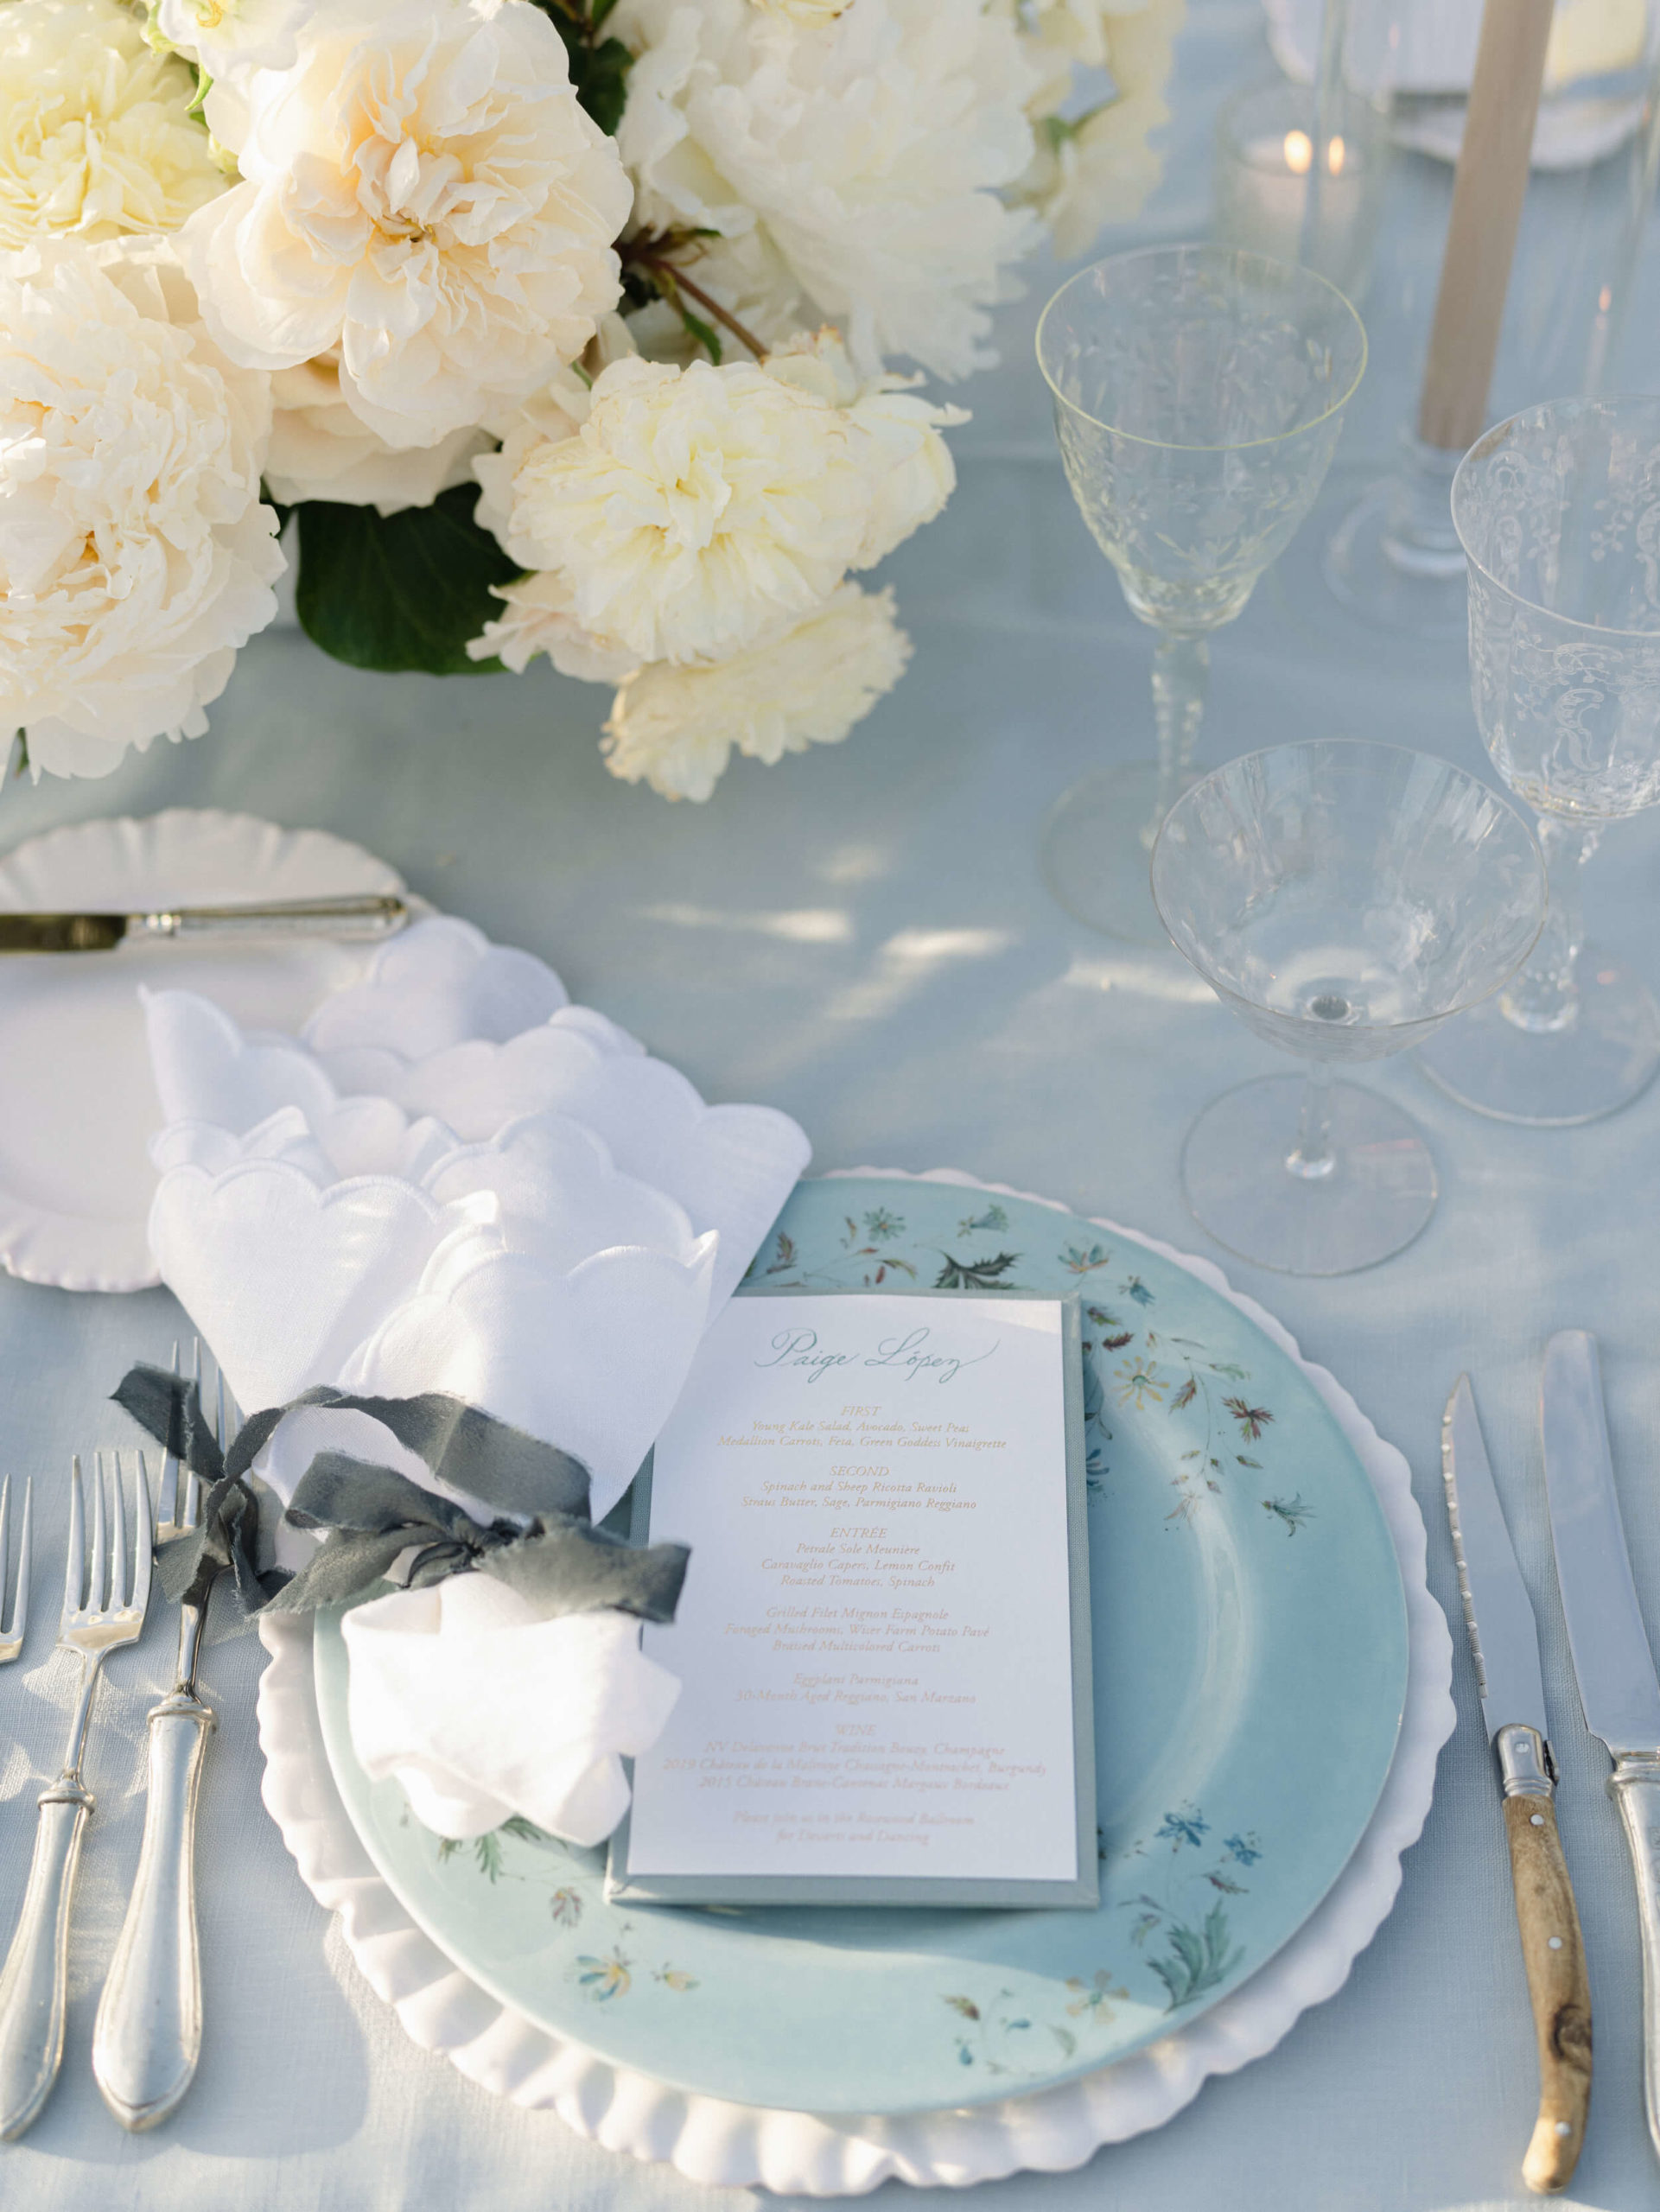 Table arrangement at a wedding